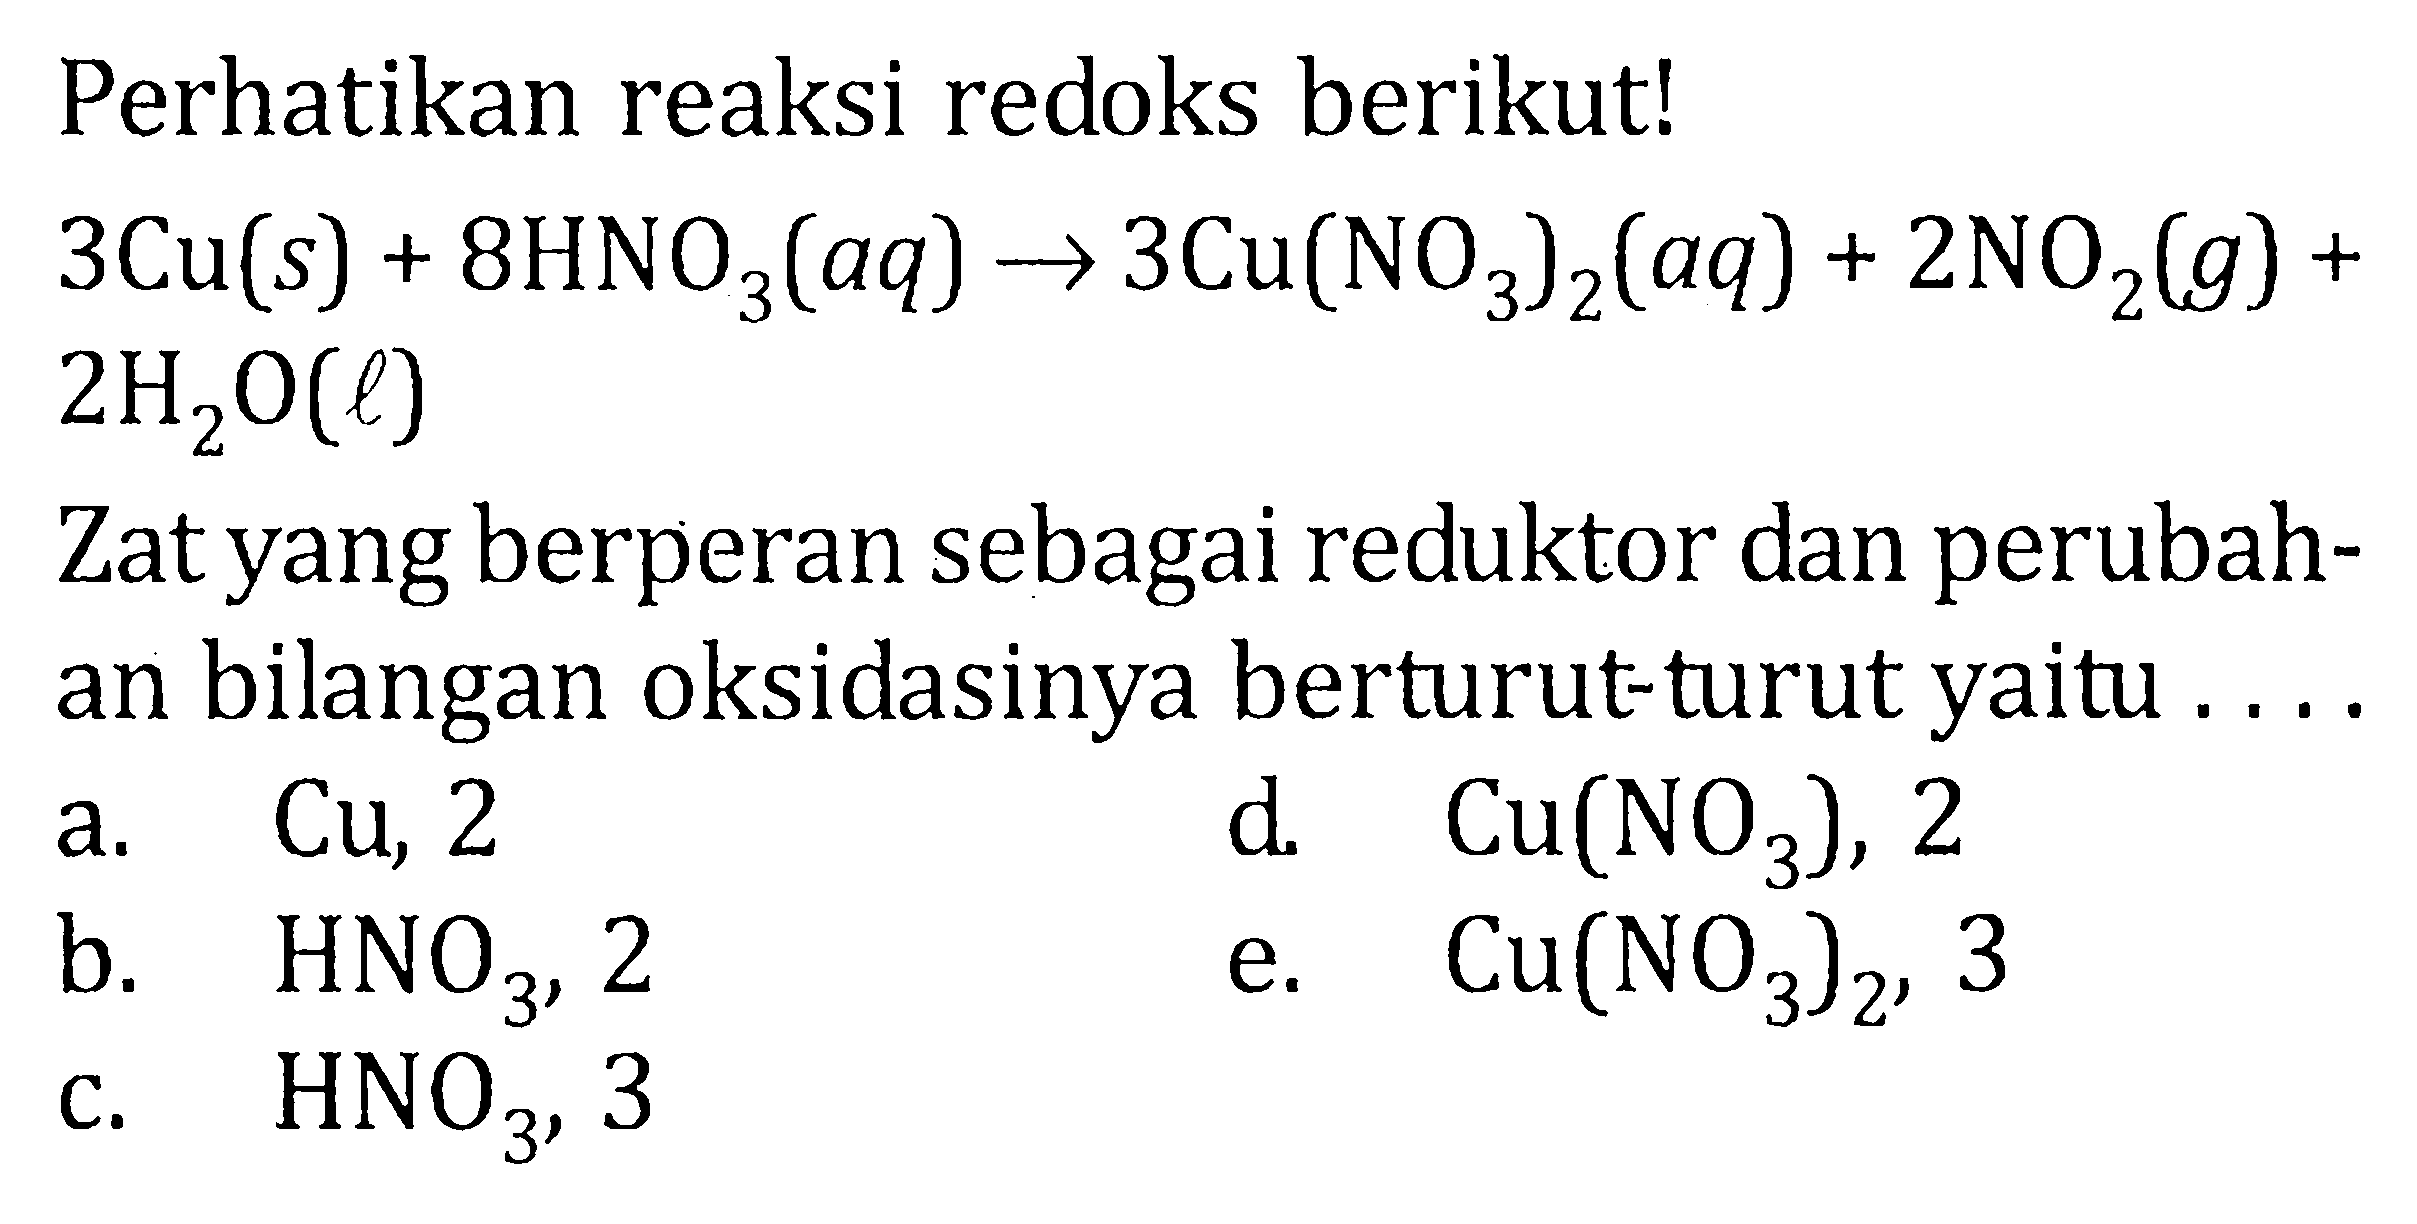 Perhatikan reaksi redoks berikut! 3Cu (s) + 8HNO3 (aq) -> 3Cu(NO3)2 (aq) + 2NO2 (g) + 2H2O (l) Zat yang berperan sebagai reduktor dan perubah- an bilangan oksidasinya berturut-turut yaitu . . . . 